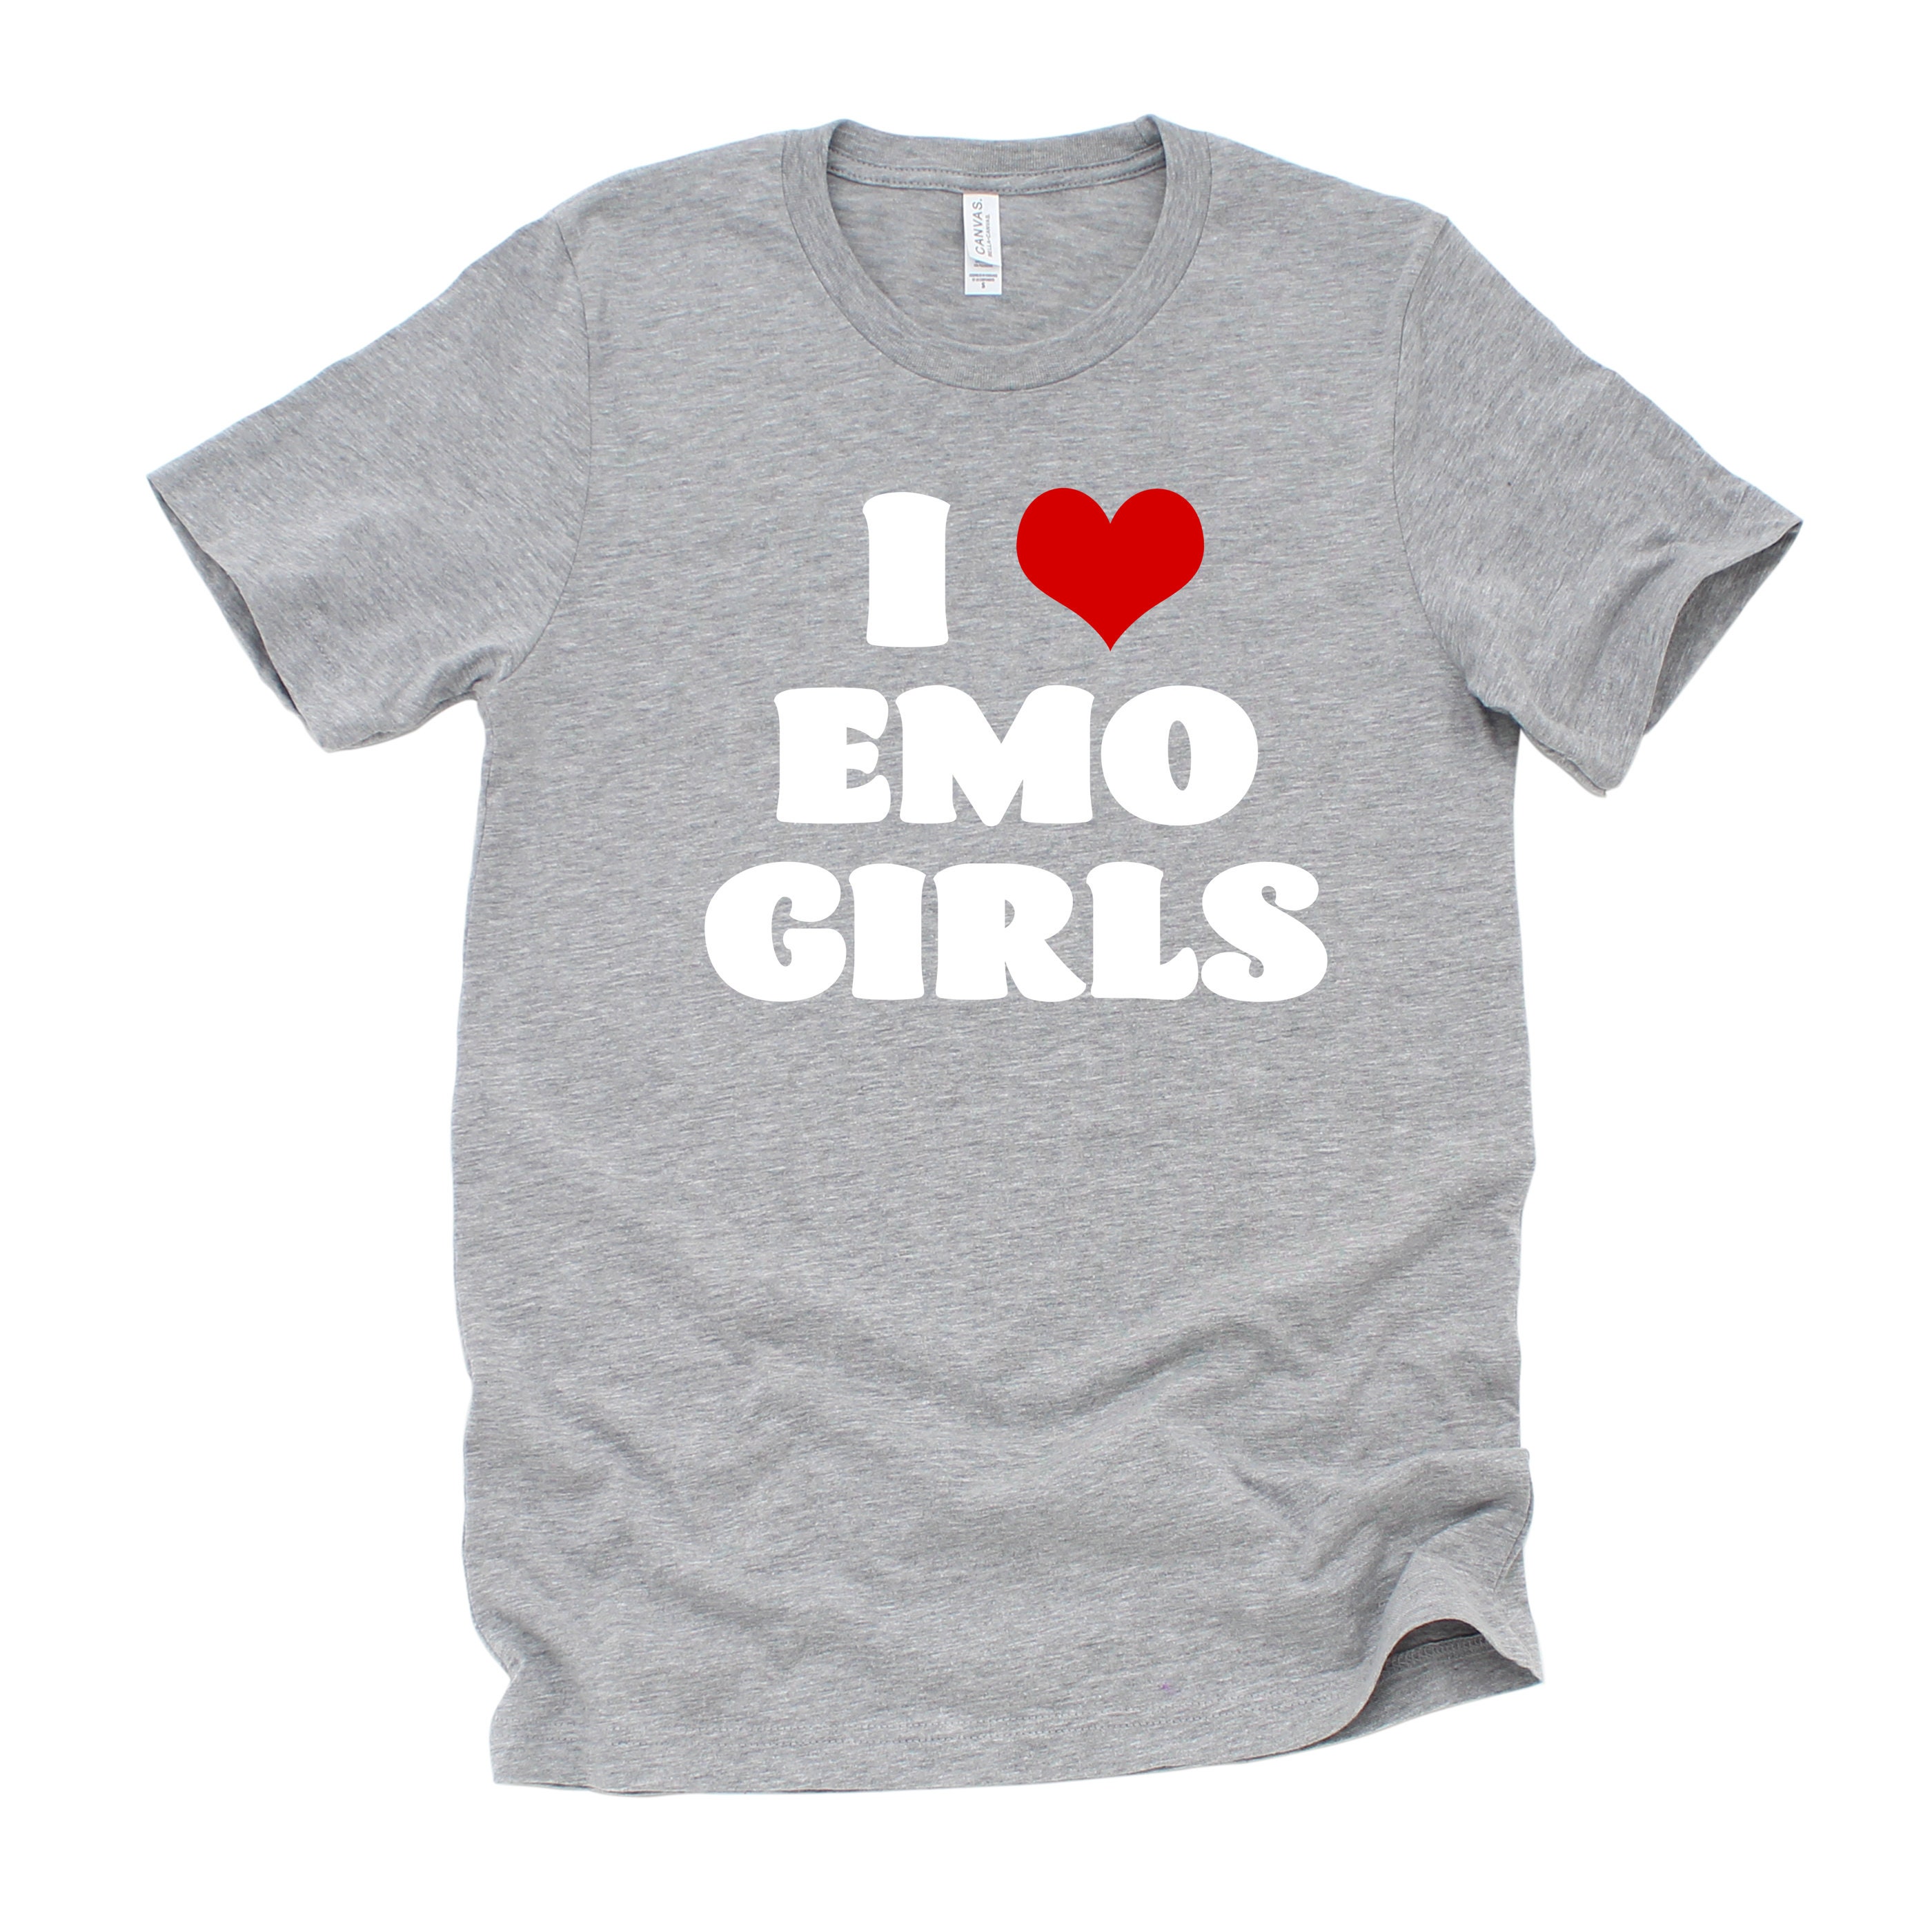 emo girl t shirt roblox